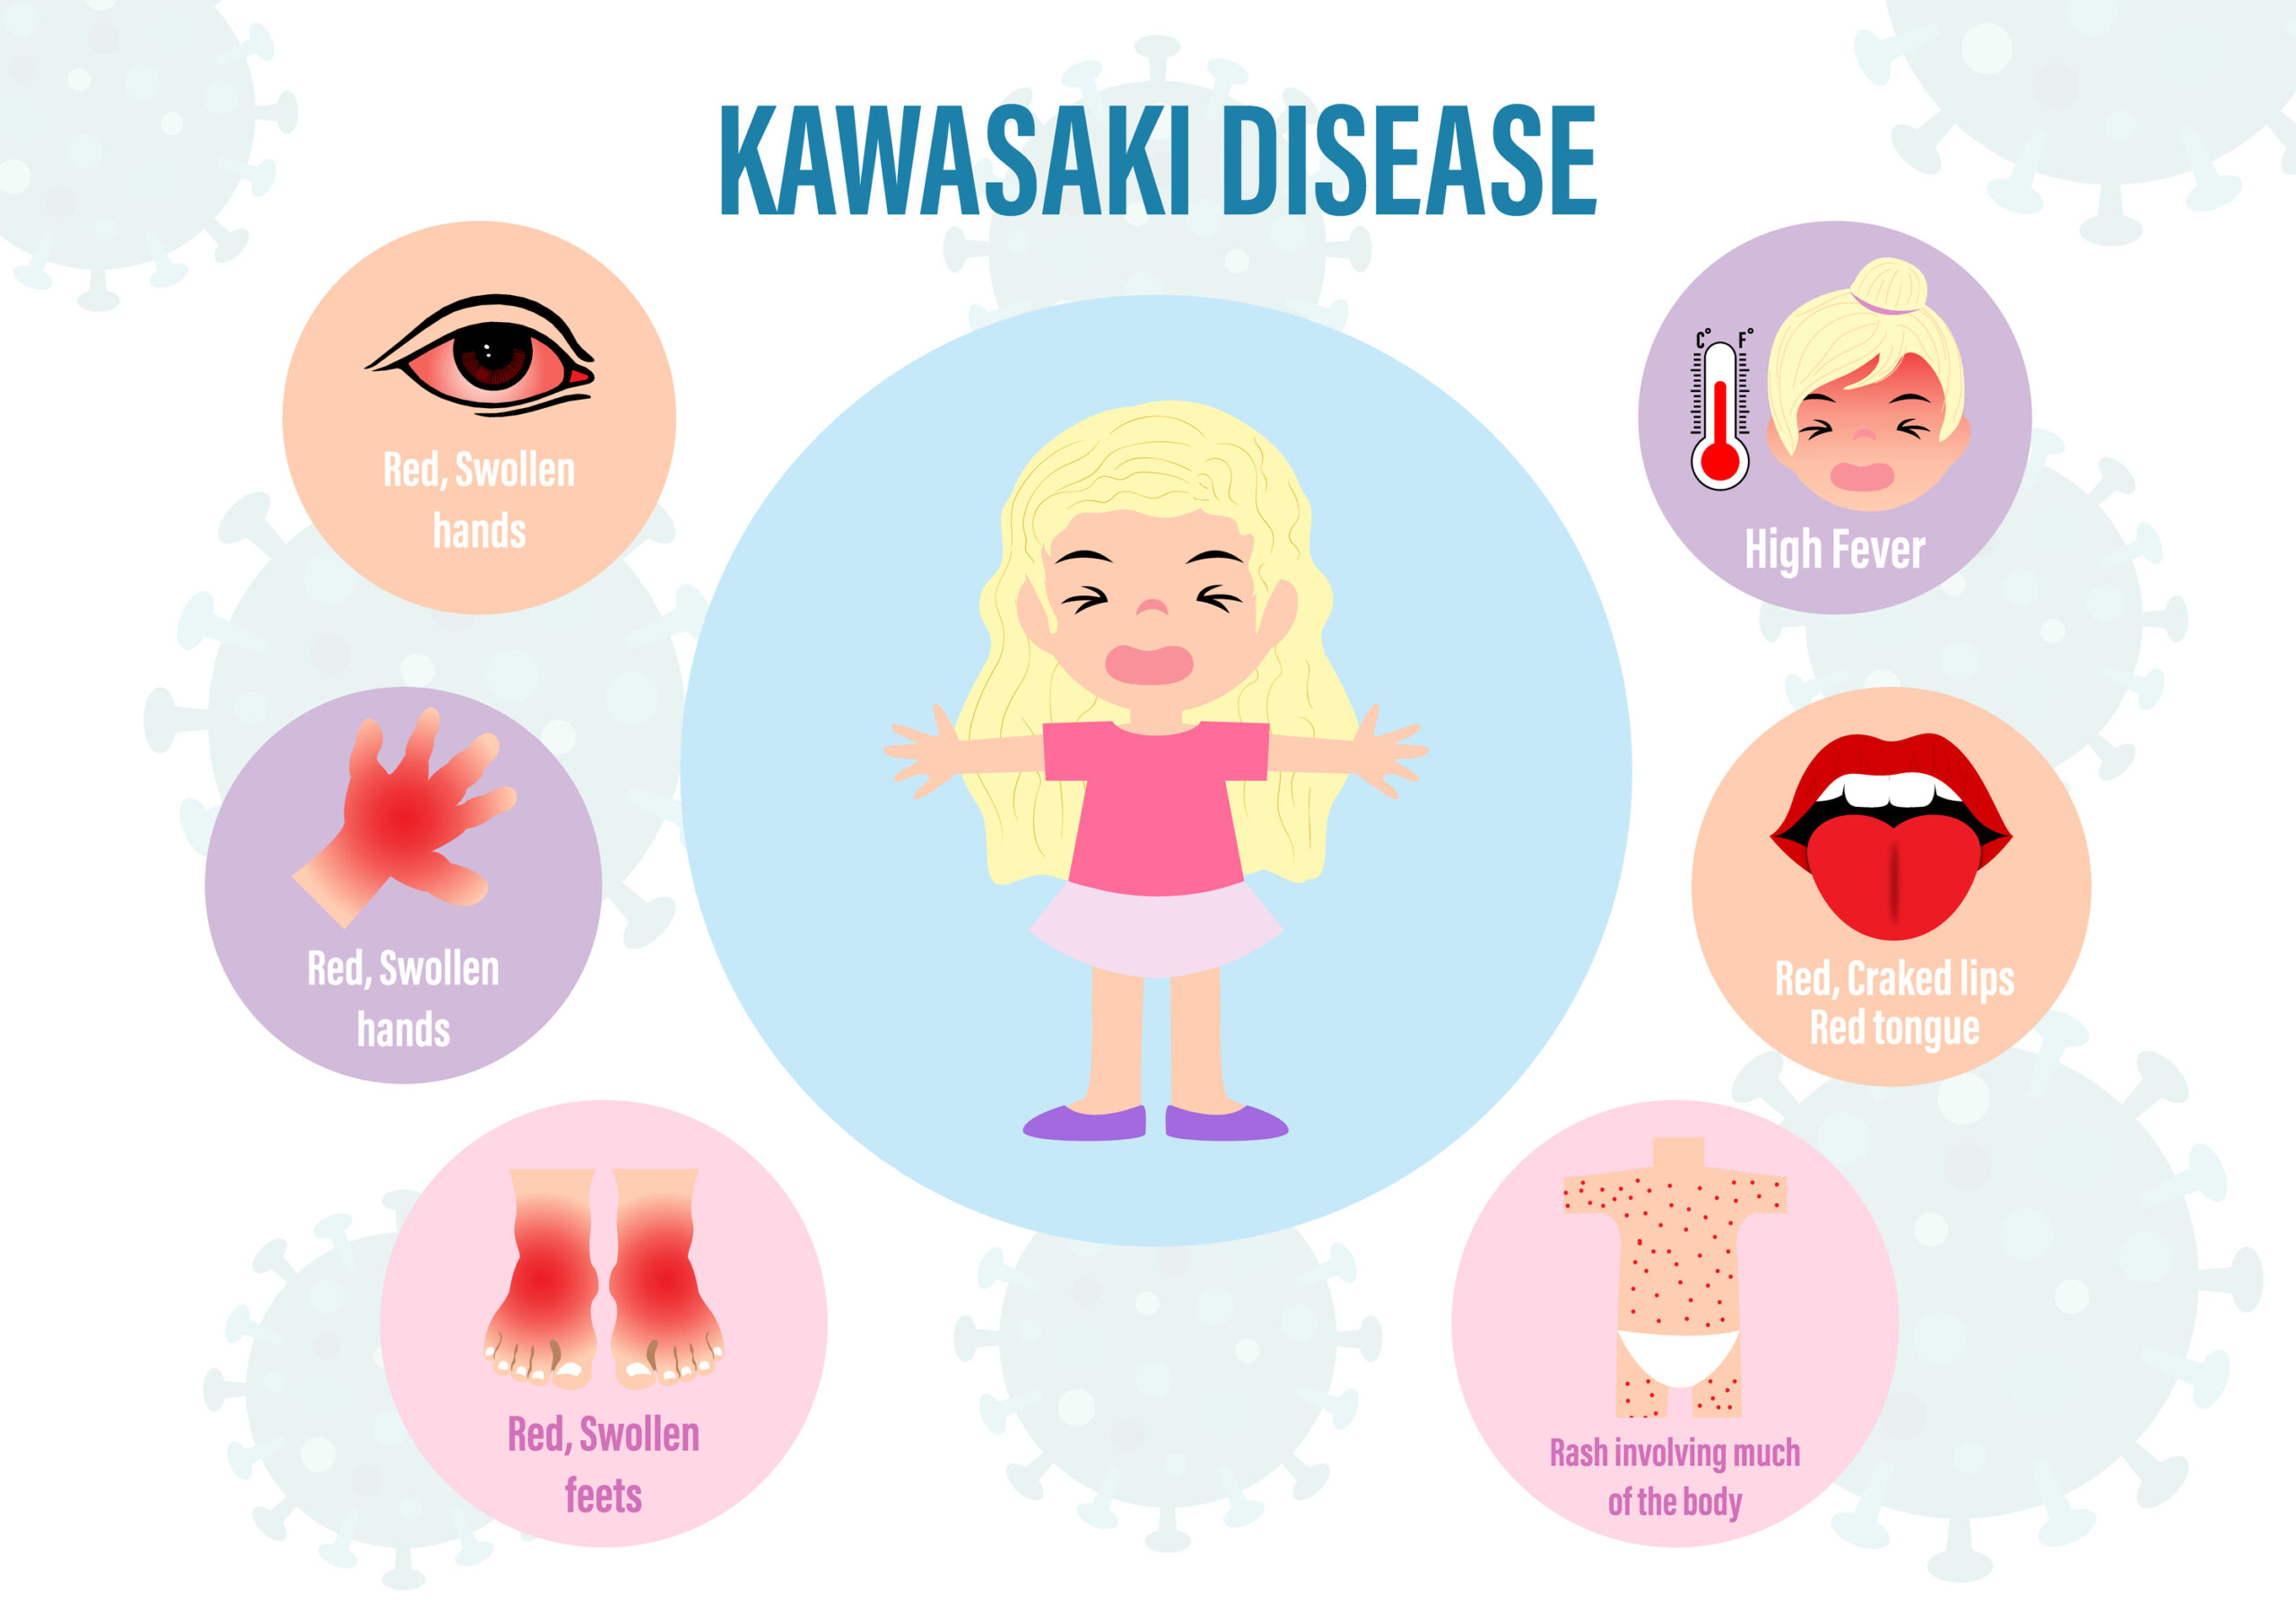 Kawasaki Disease: What Is, Symptoms, Diagnosis, and Treatment